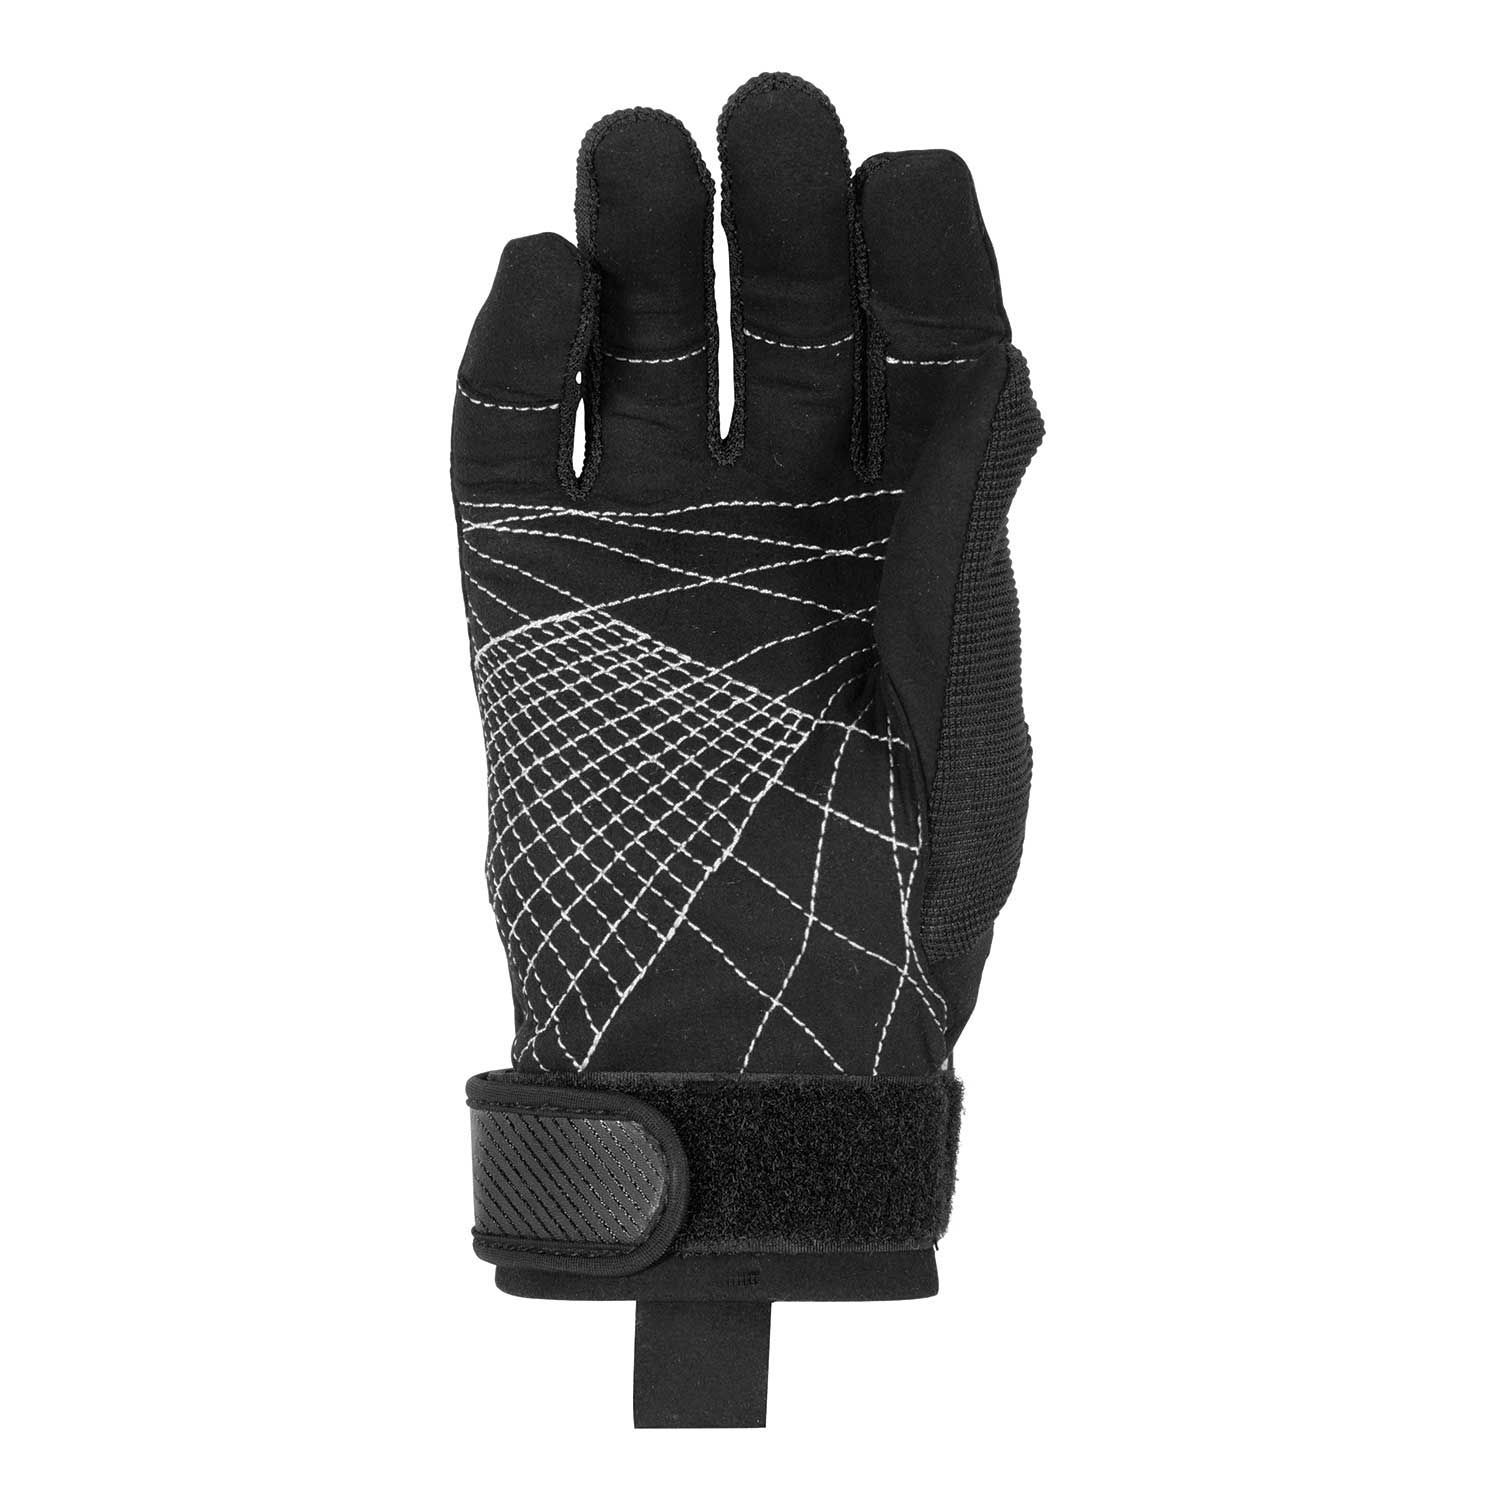 HO Sports Men's Pro Grip Water Ski Gloves